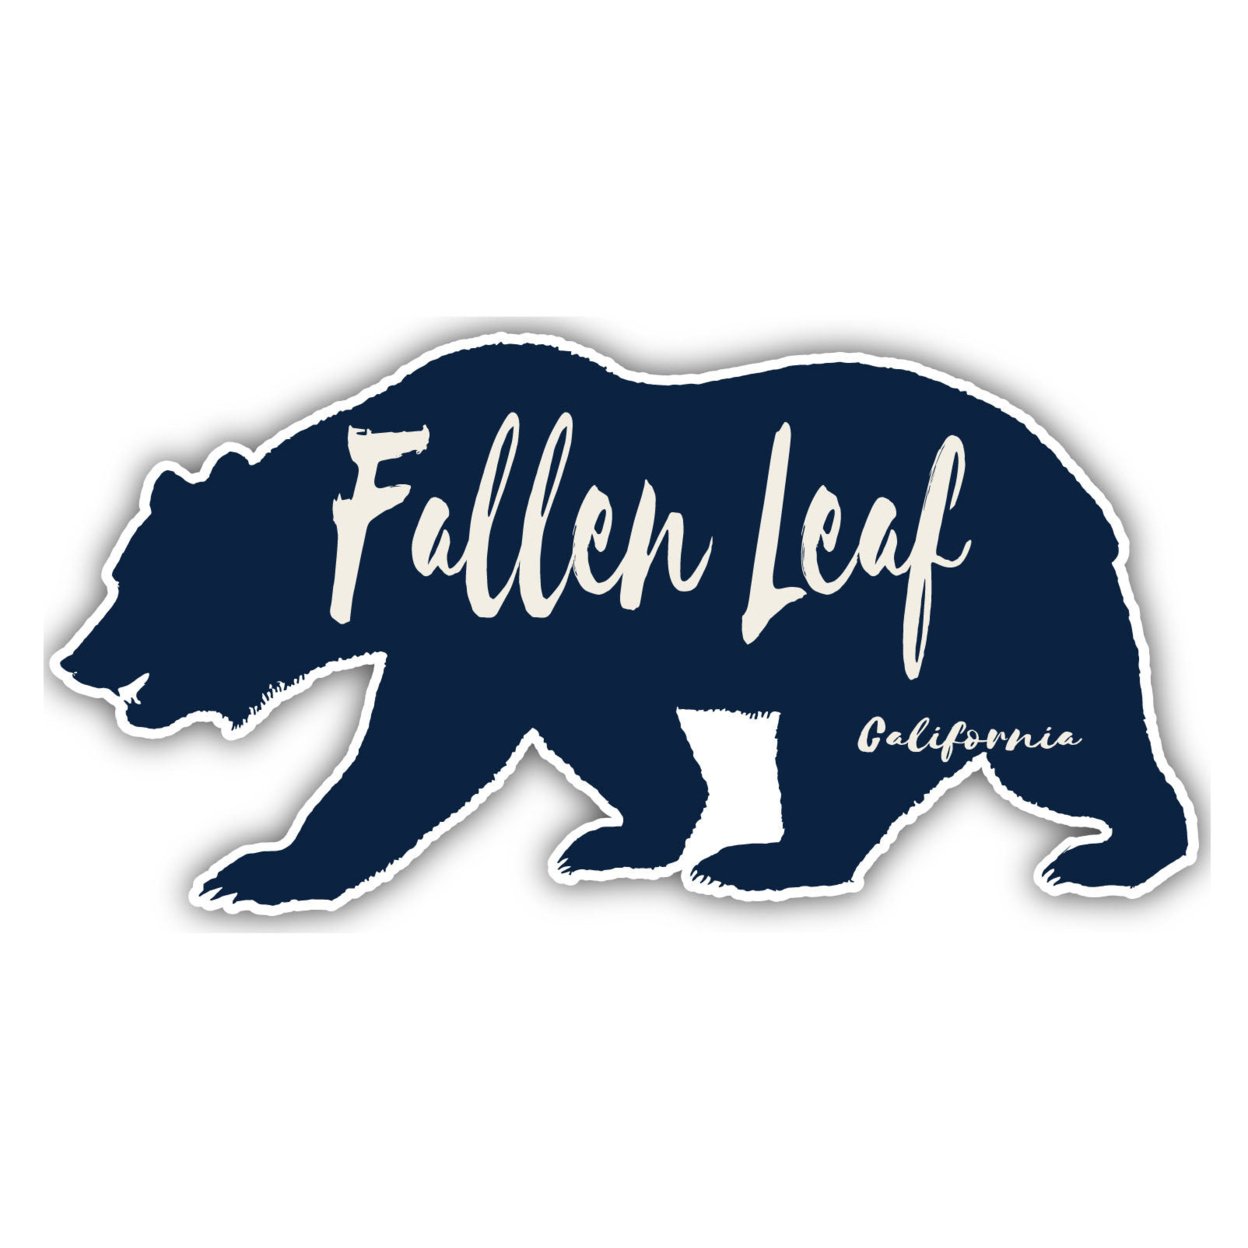 Fallen Leaf California Souvenir Decorative Stickers (Choose Theme And Size) - Single Unit, 4-Inch, Camp Life